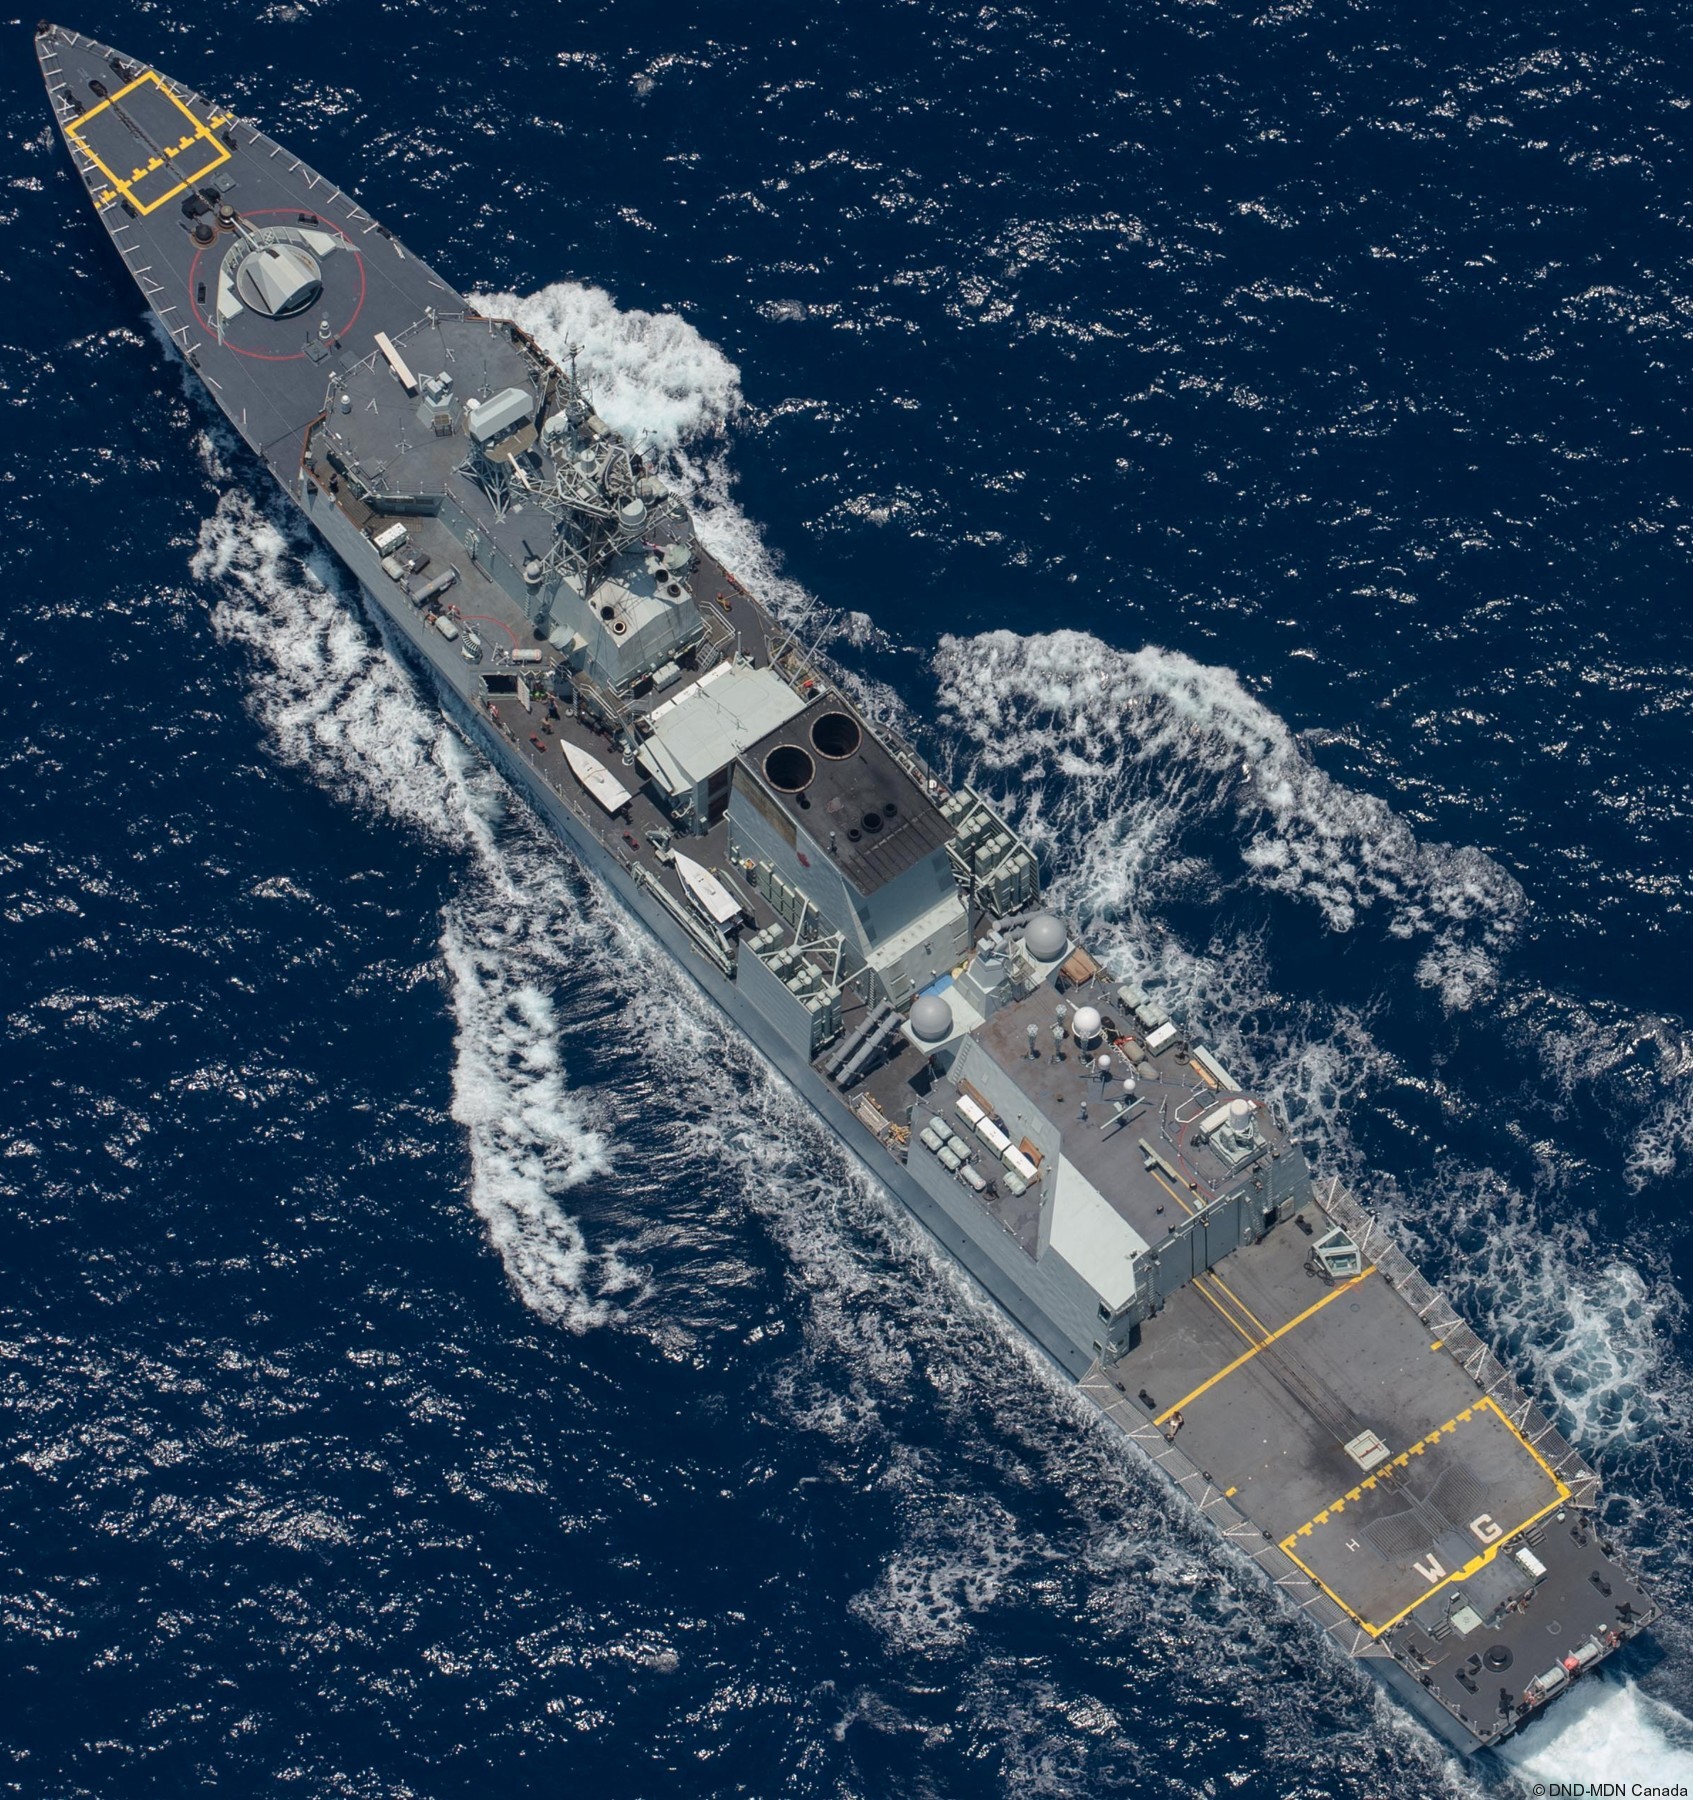 ffh-338 hmcs winnipeg halifax class helicopter patrol frigate ncsm royal canadian navy 12